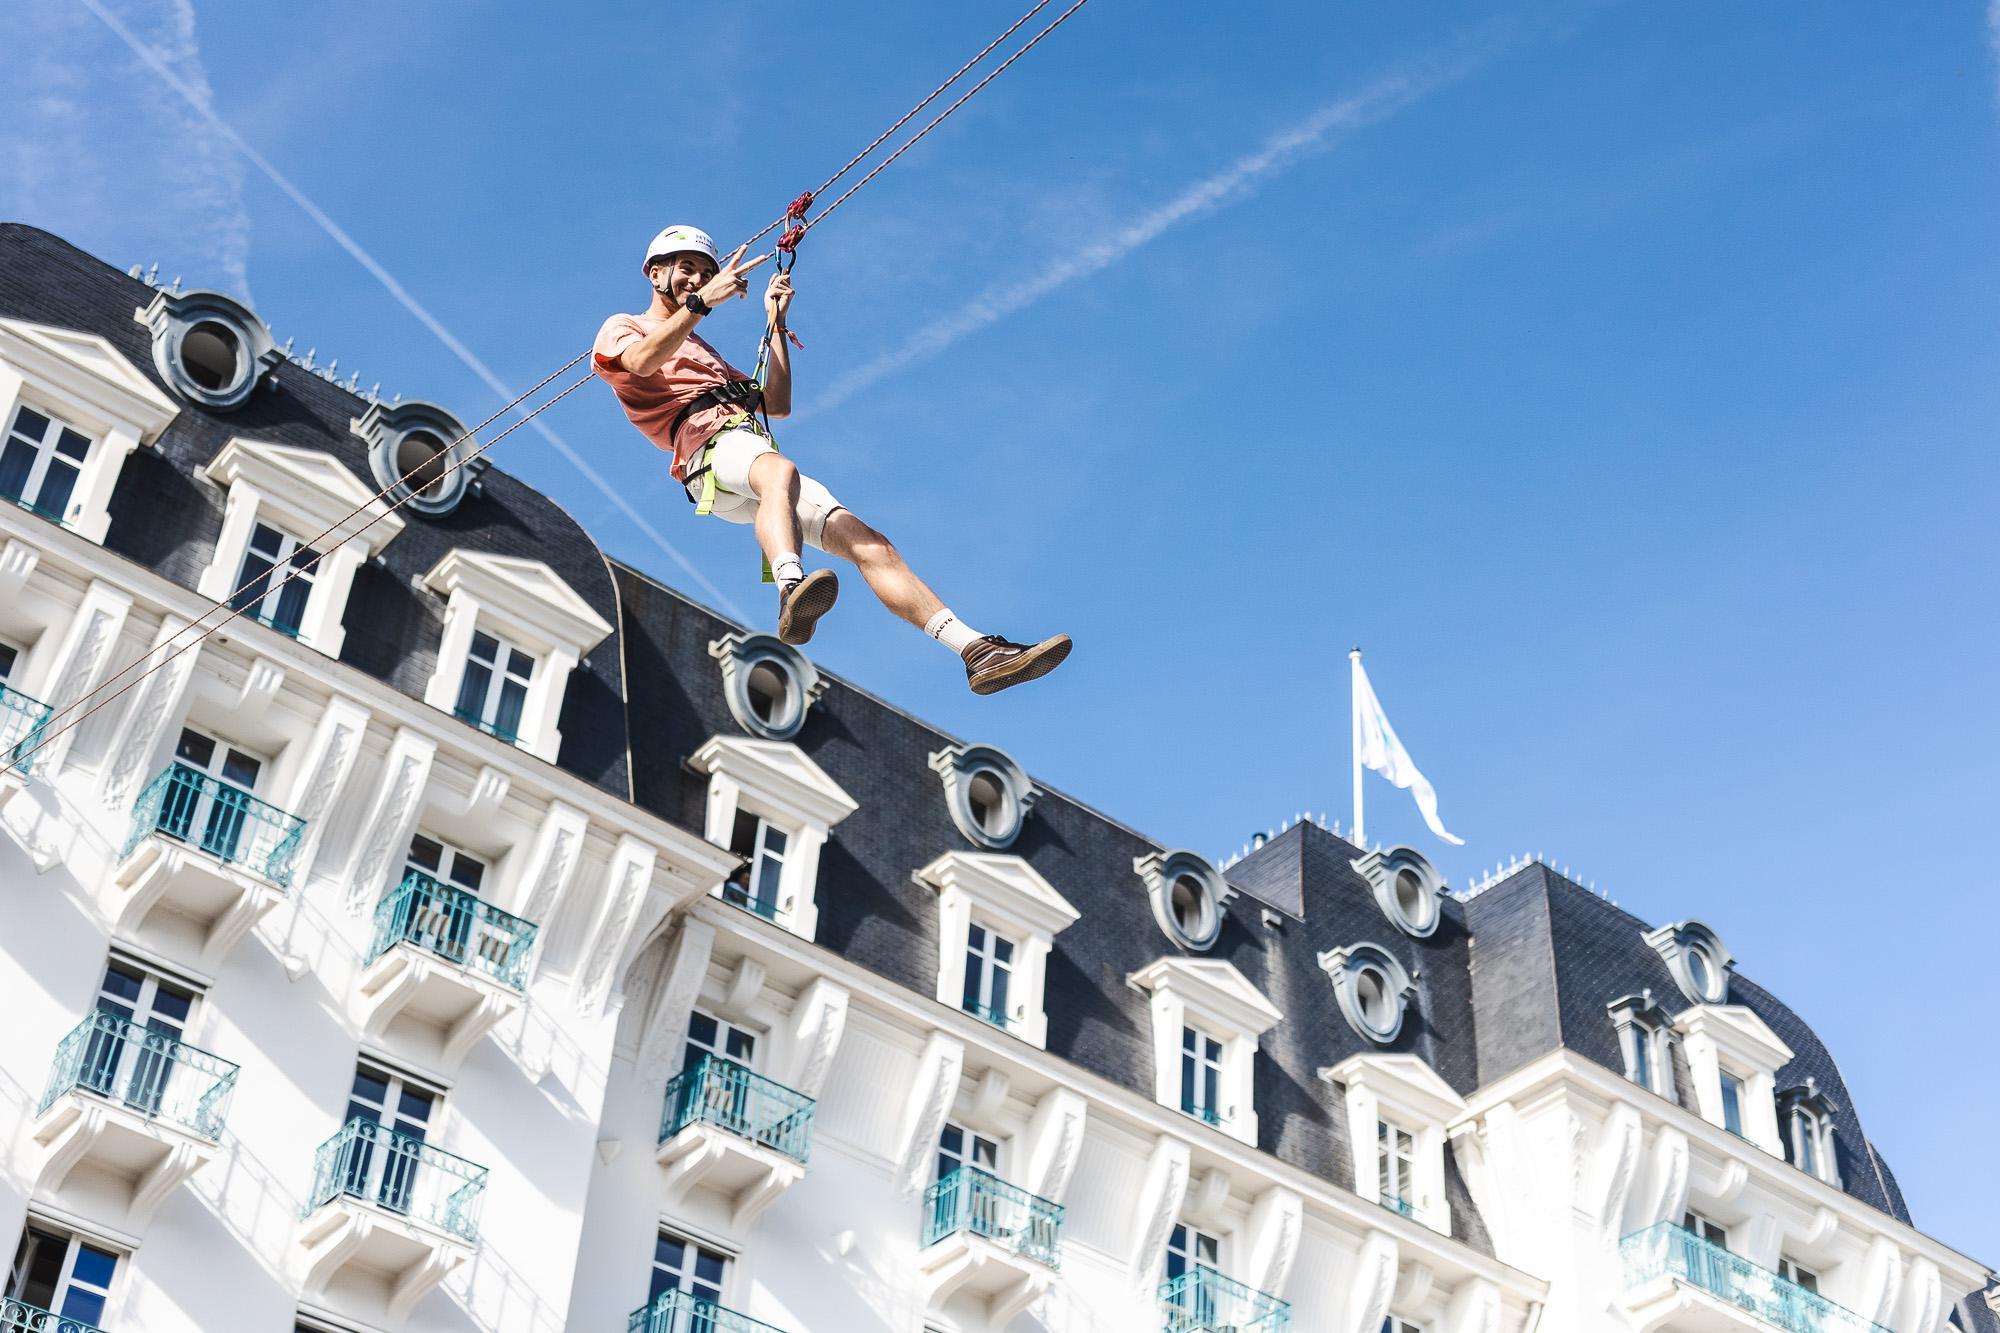 Hadrien Durand (High Five Festival) : « Annecy est un haut lieu de l’outdoor en Europe »